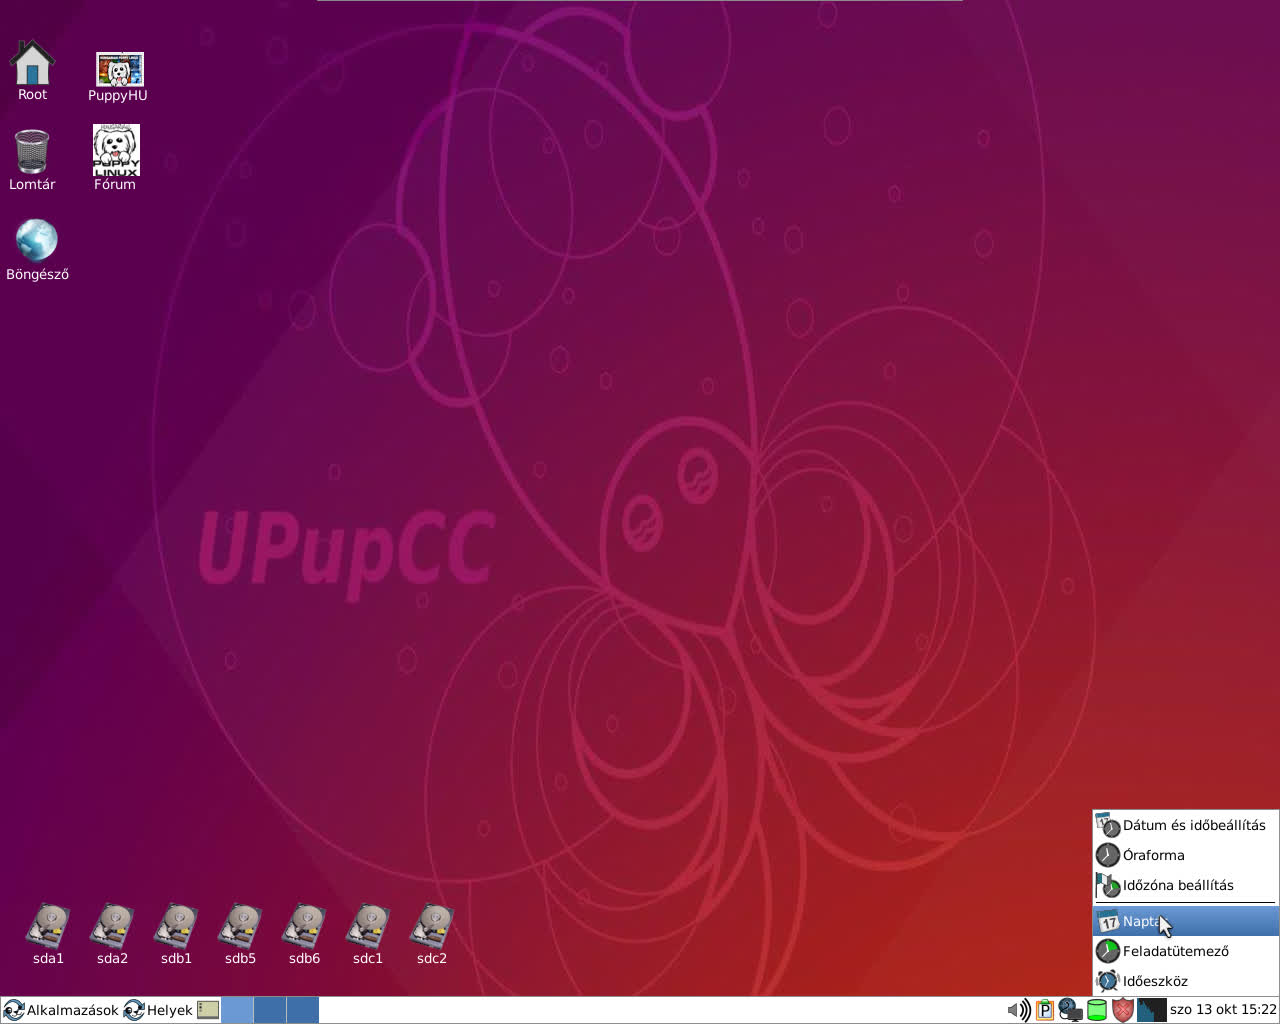 upupcc-B1.jpg